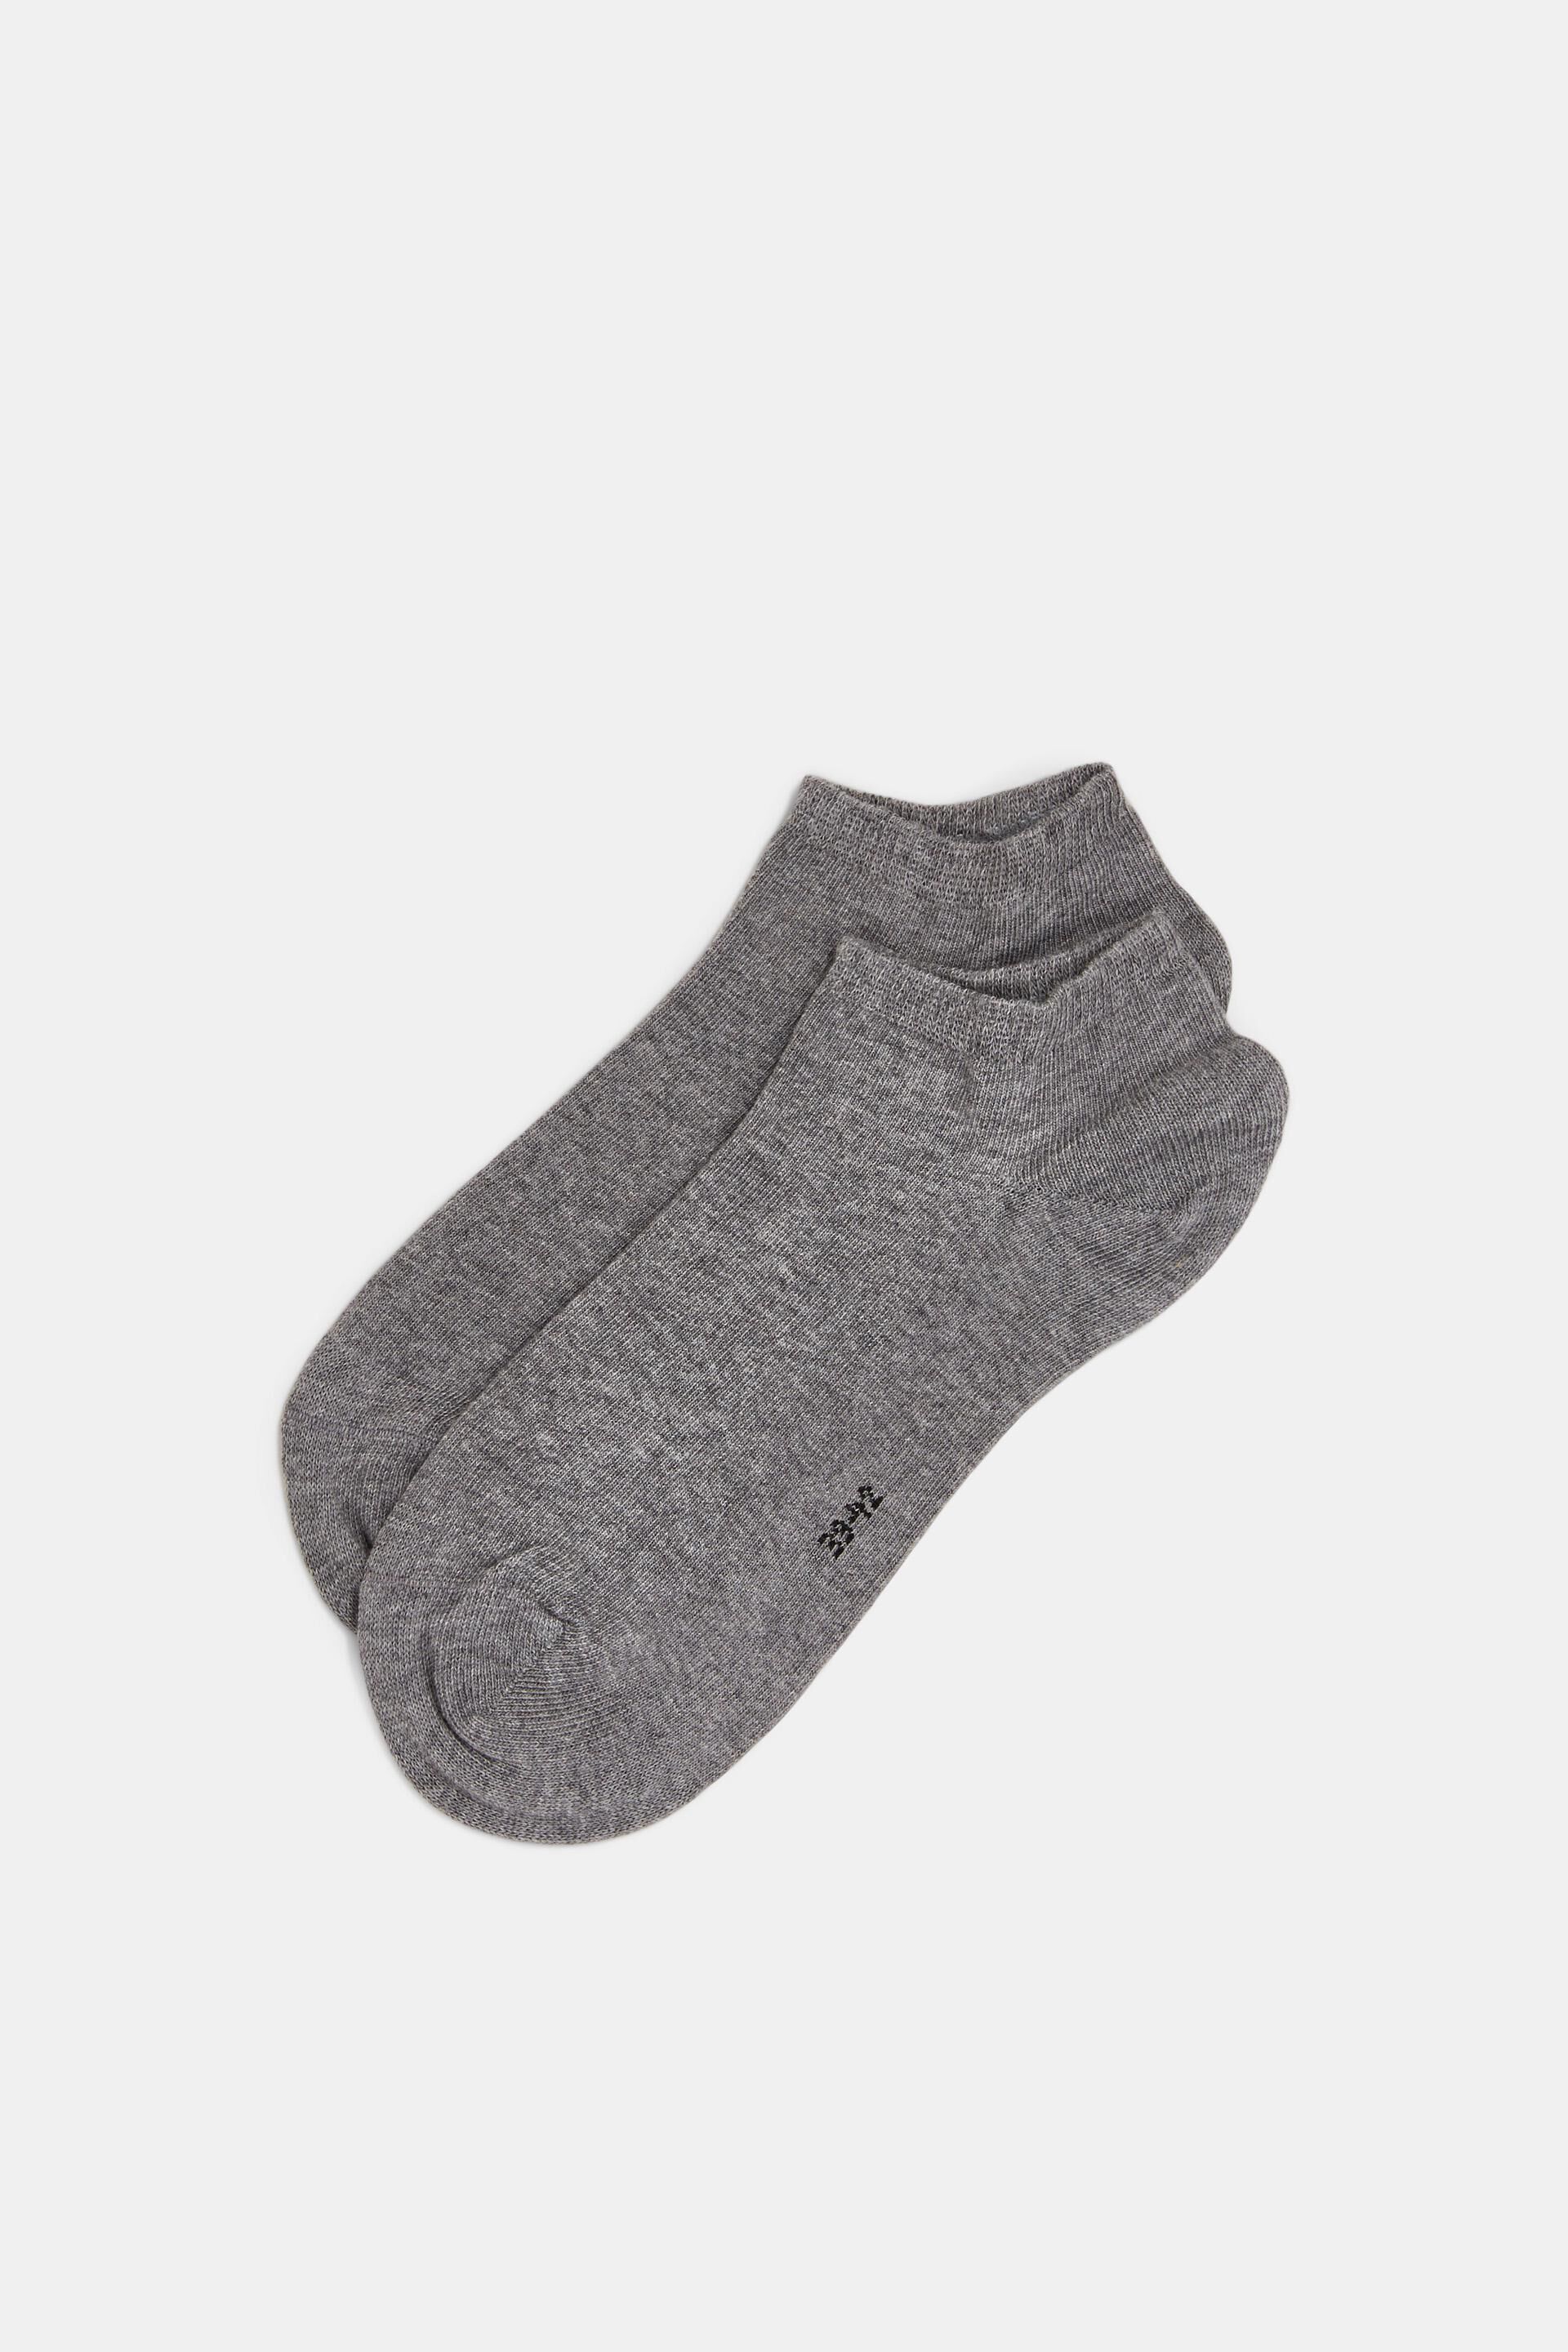 Esprit organic socks, cotton trainer of 2-pack